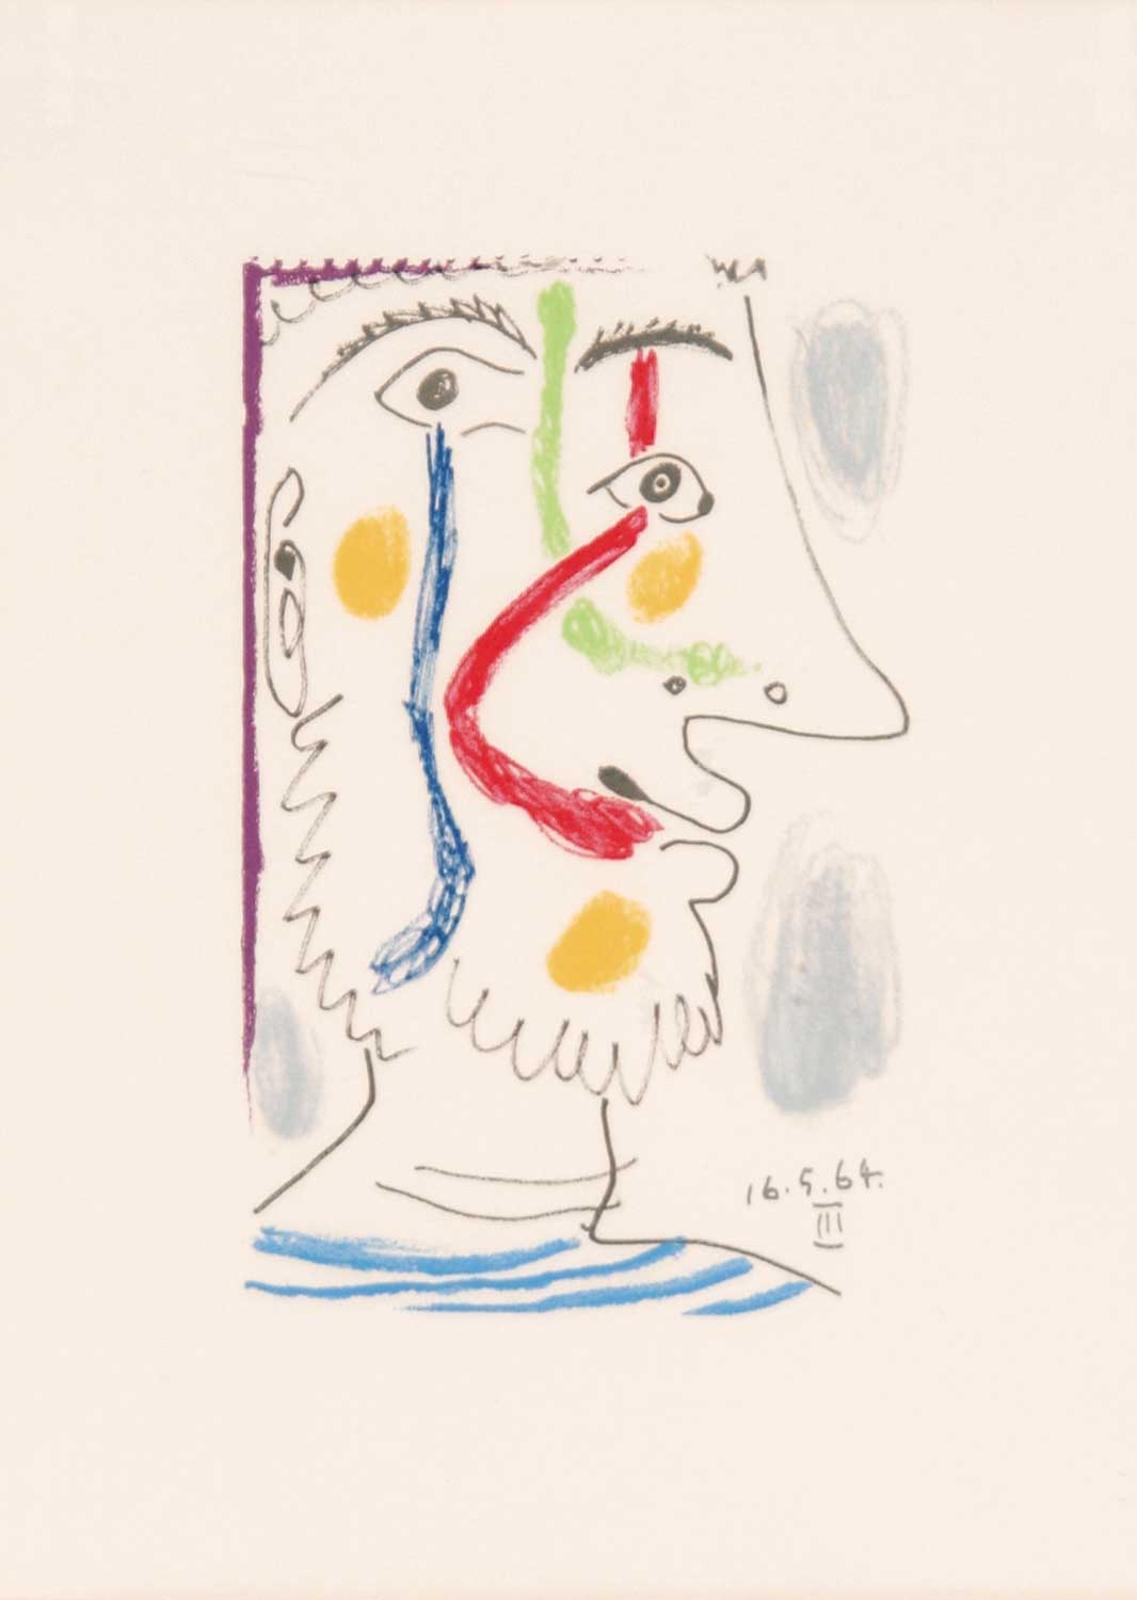 Pablo Ruiz Picasso (1881-1973) - Untitled - Portrait 16.5.64.III